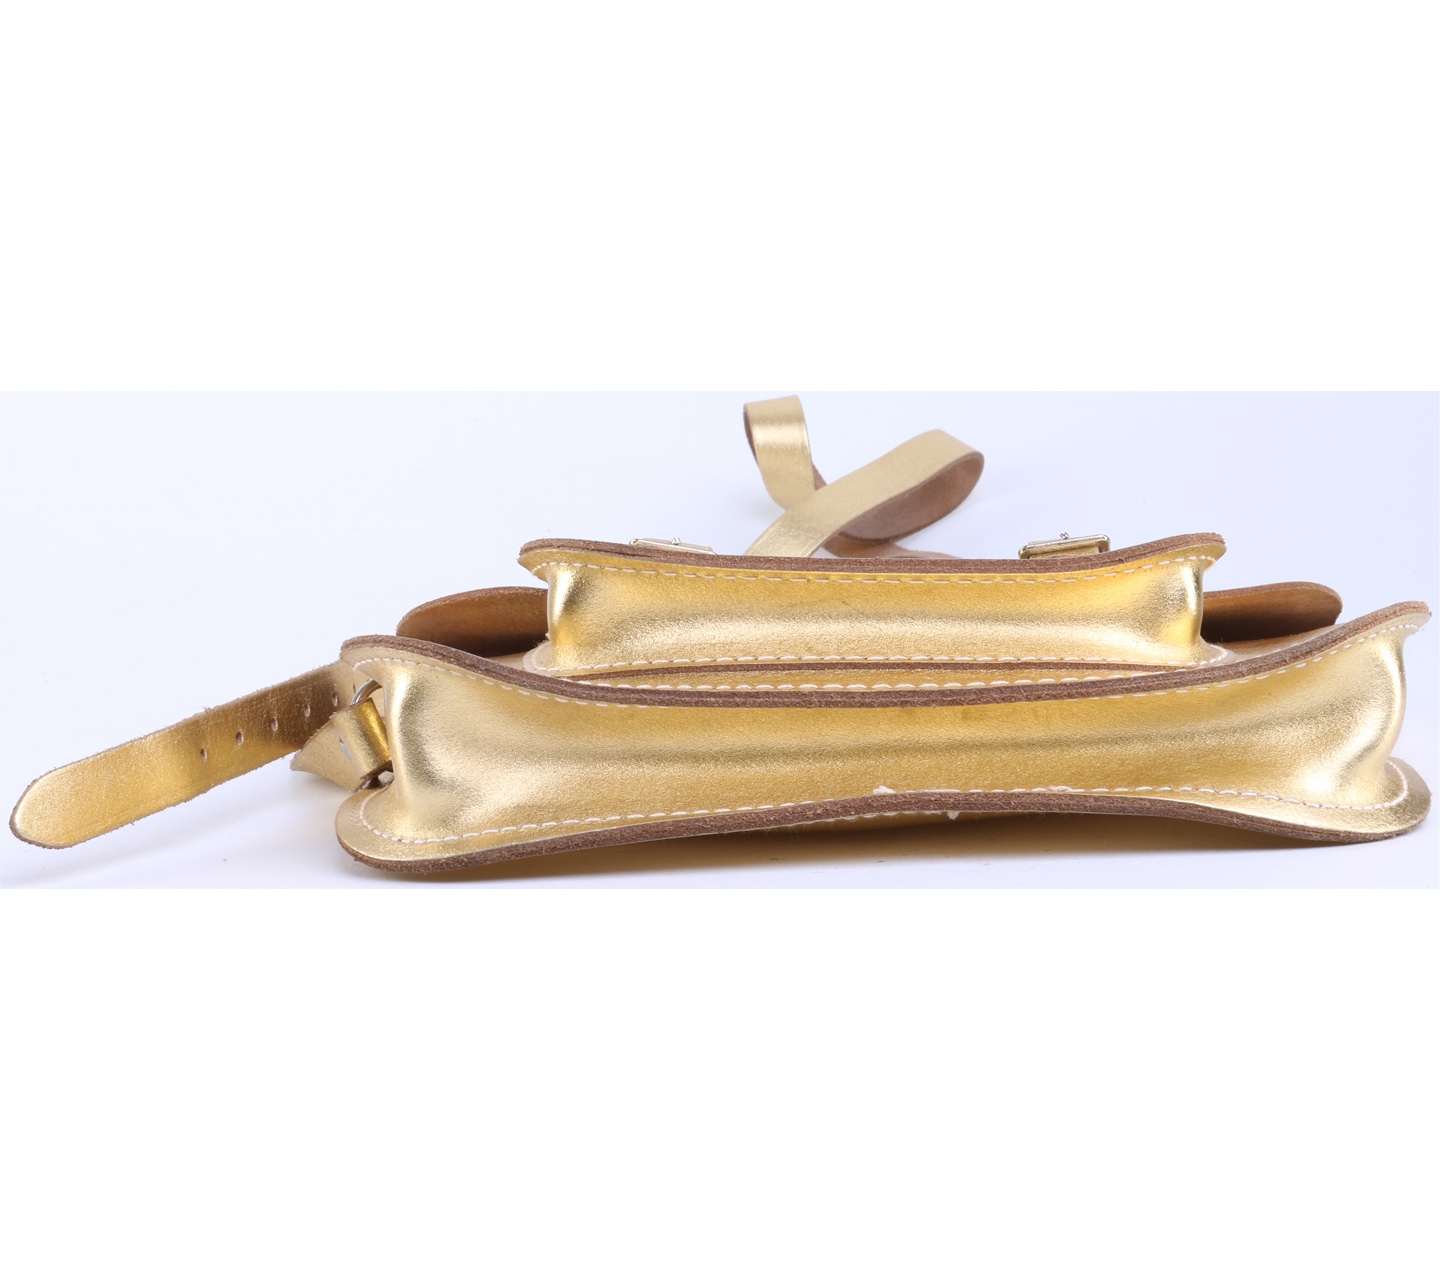 The Cambridge Satchel Company Gold Sling Bag